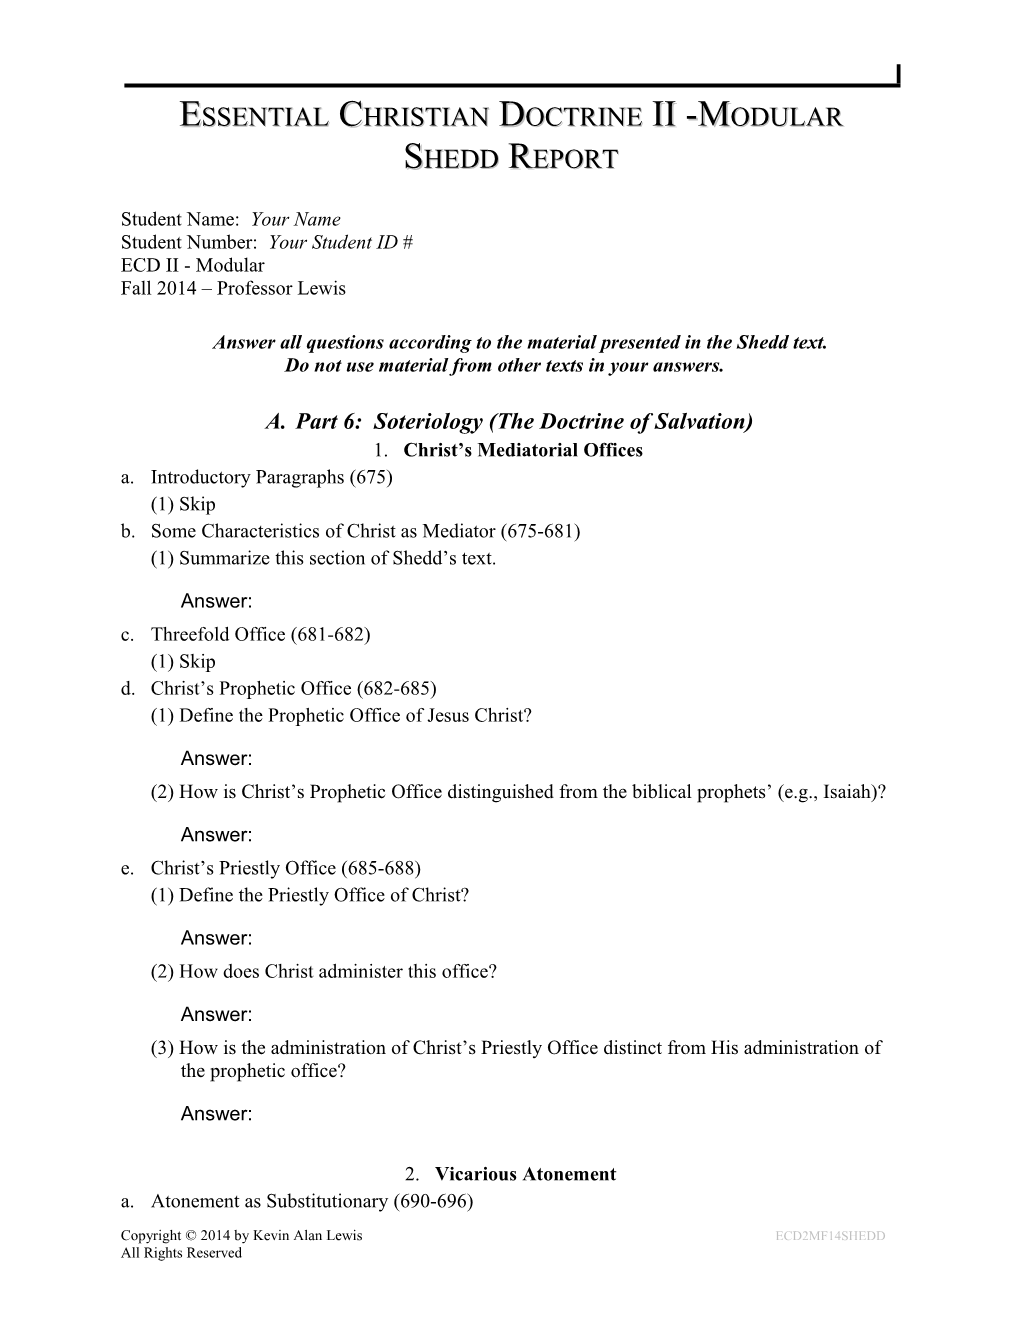 ECD 2-Modular-Fall Semestershedd Reportpage 1